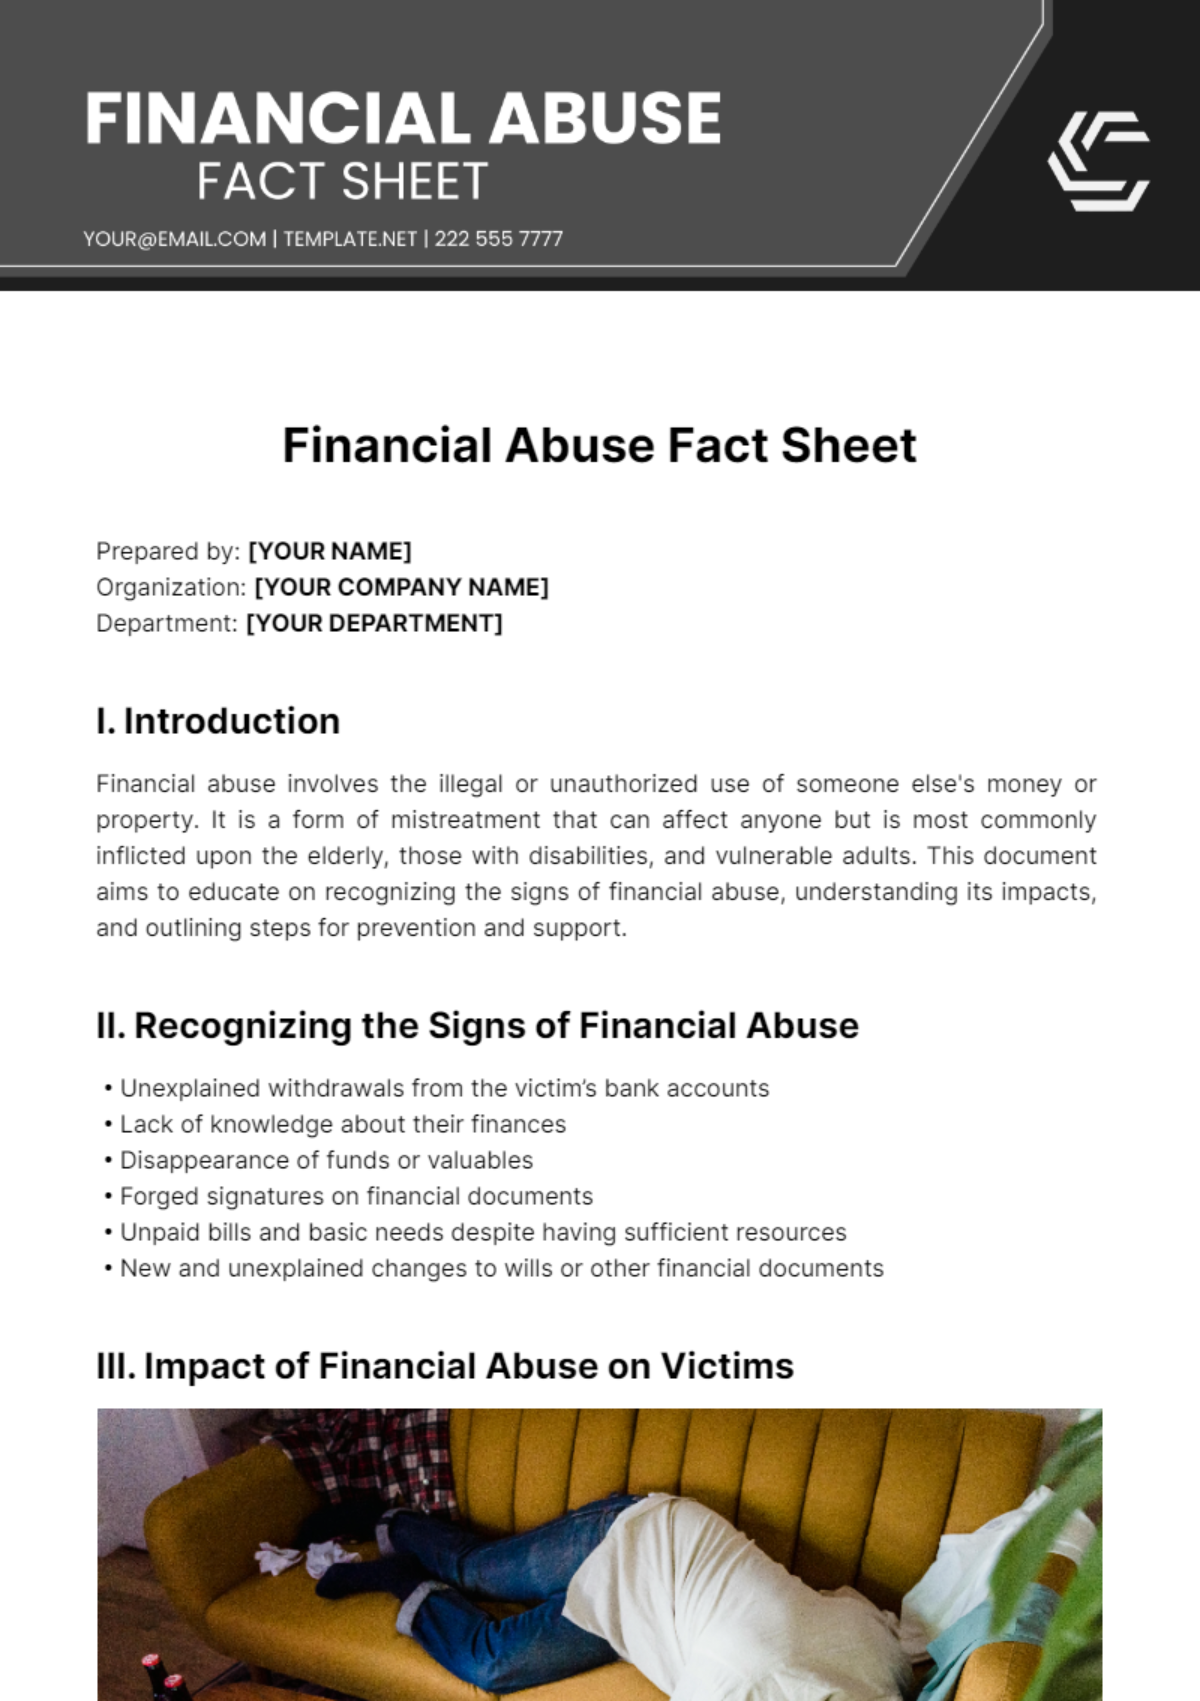 Financial Abuse Fact Sheet Template